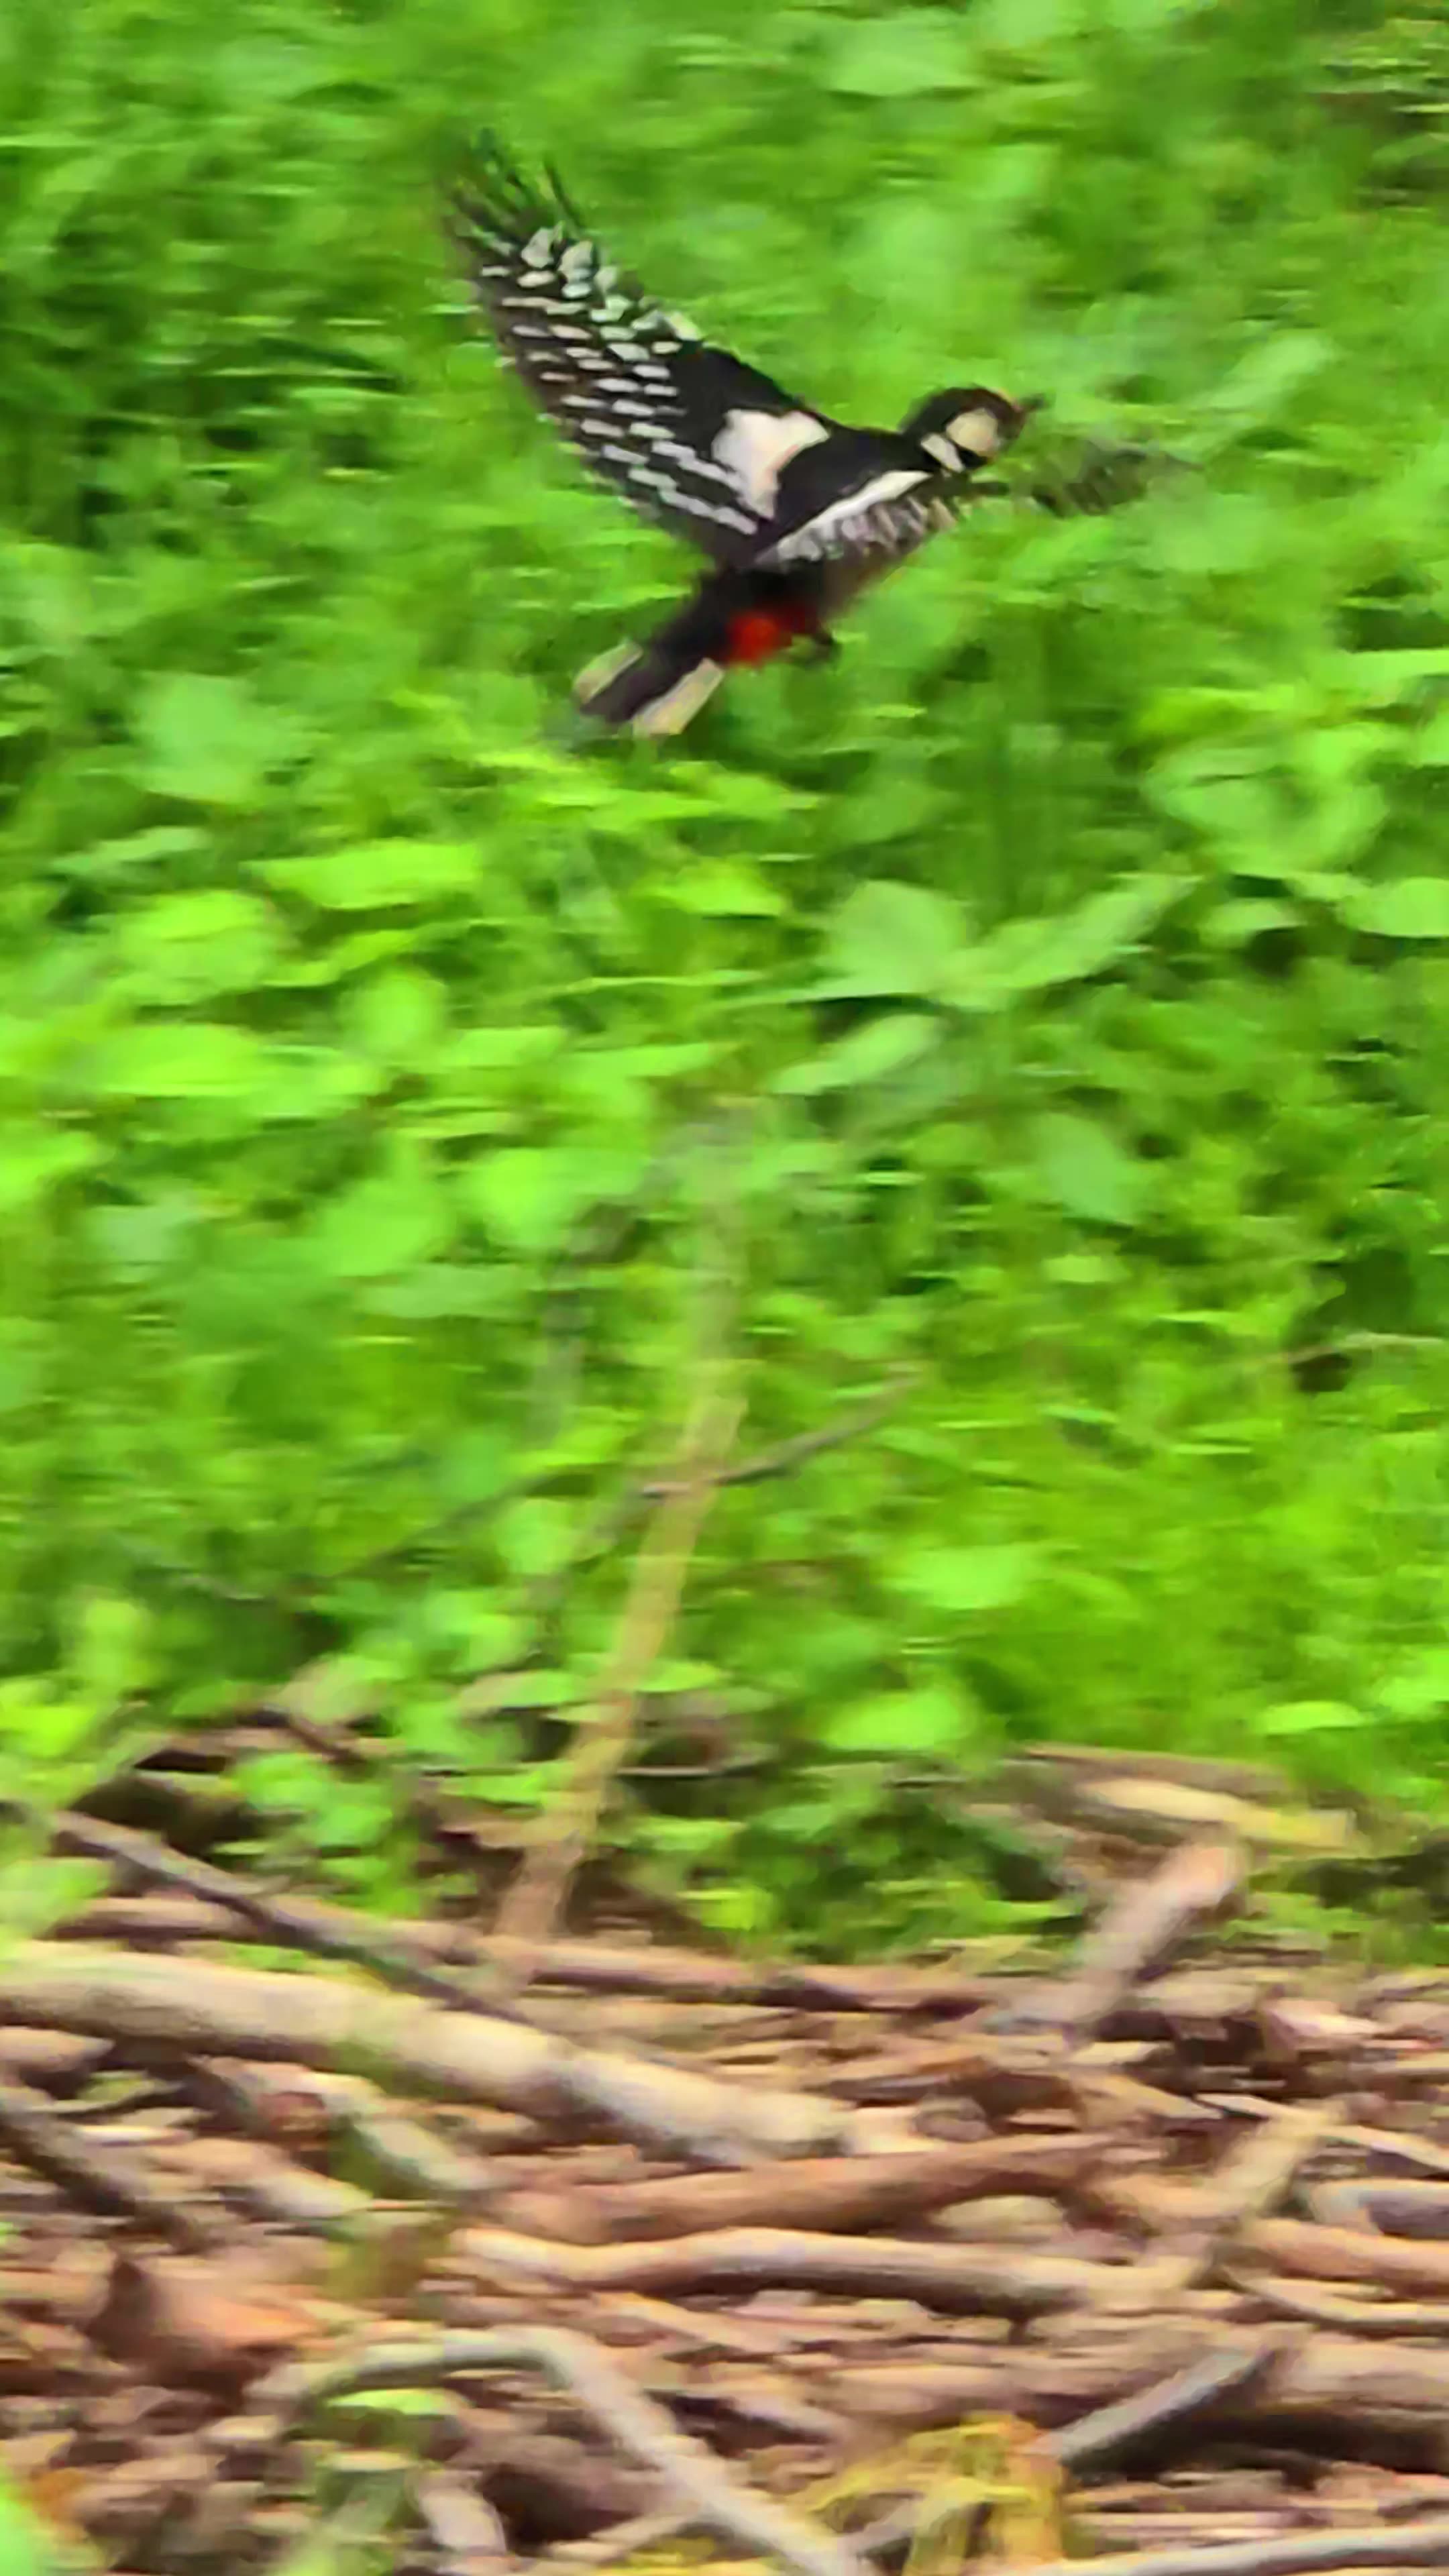 A woodpecker flying towards a tree in slow motion/beautiful great spotted woodpecker.